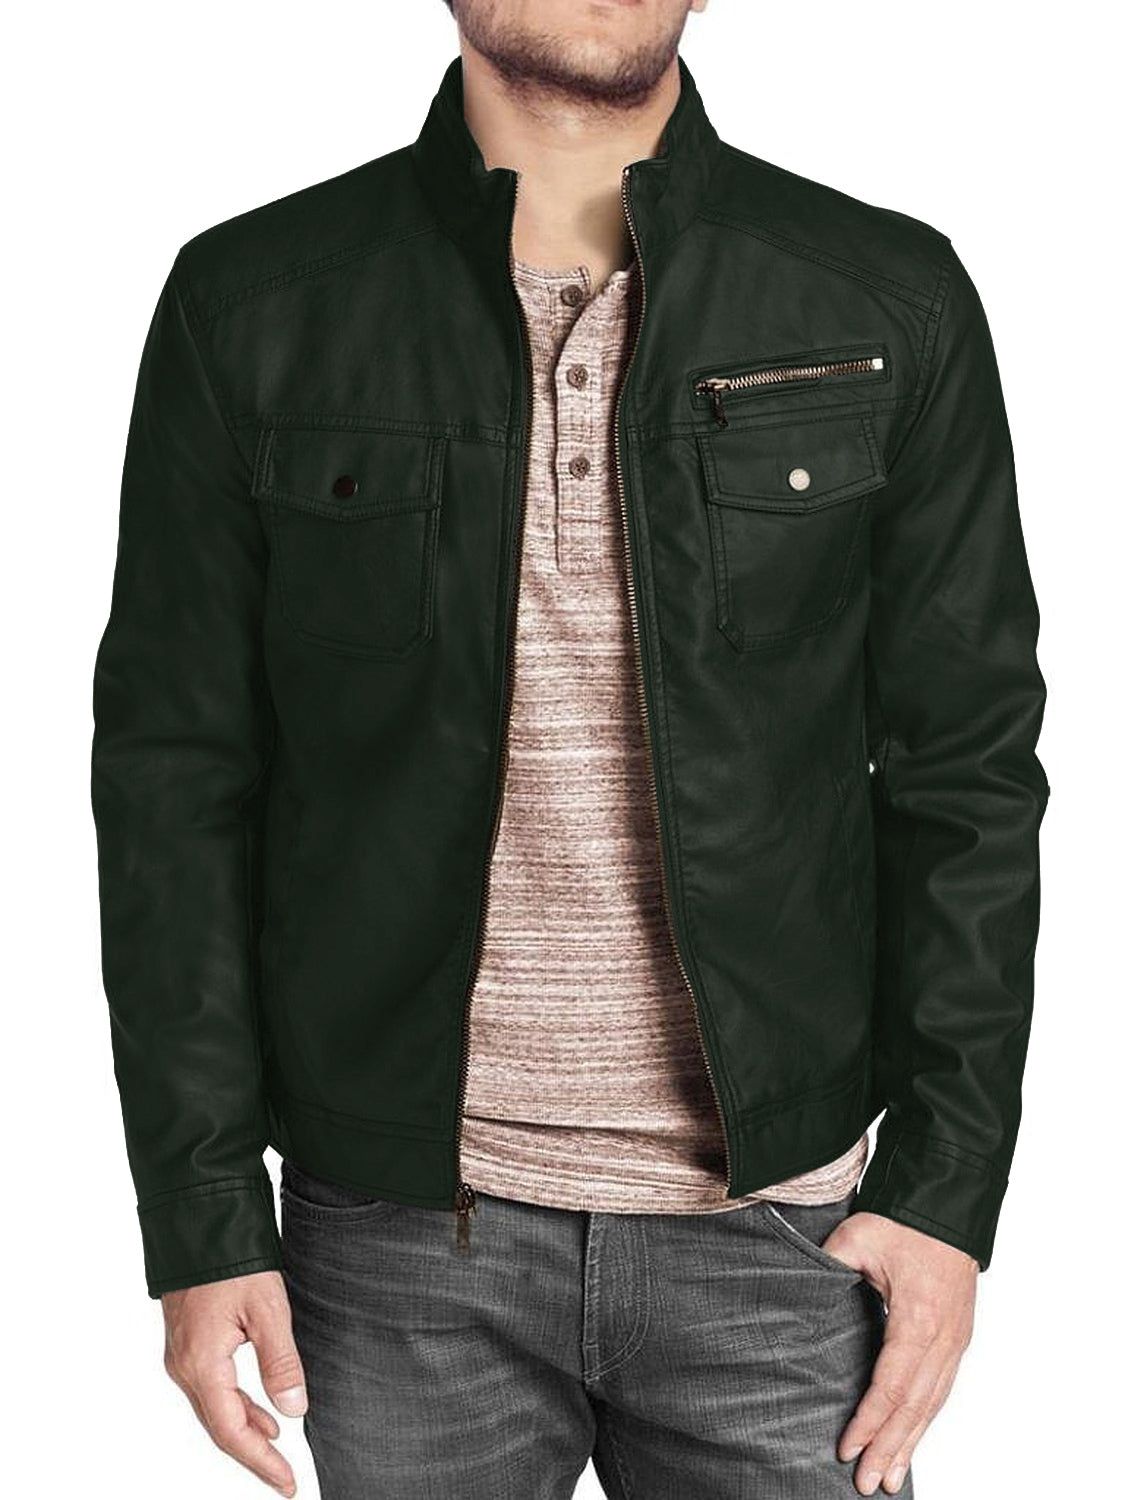 Leather Jackets Hub Mens Genuine Lambskin Leather Jacket (Black, Regal Jacket) - 1501332